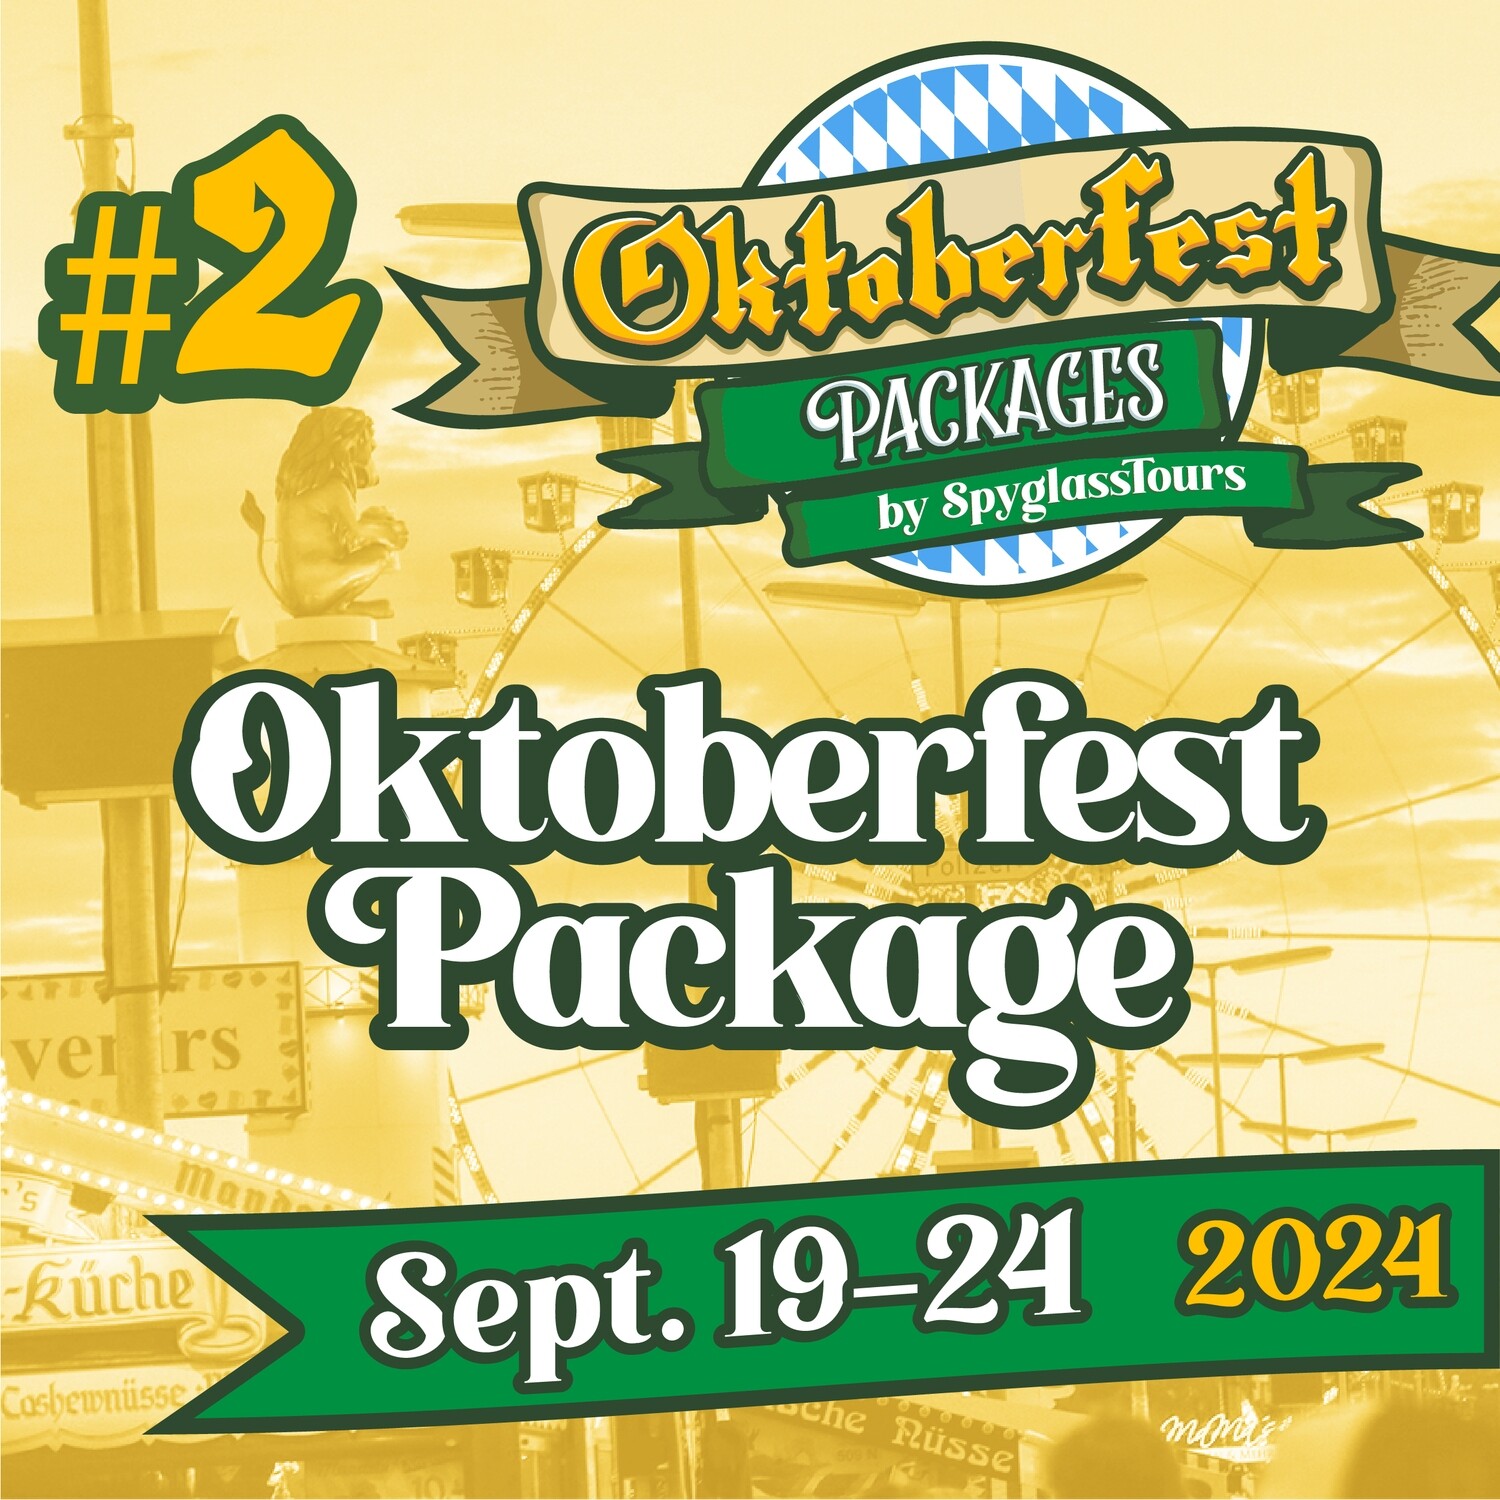 Oktoberfest Package #2 Sept. 19-24, 2024